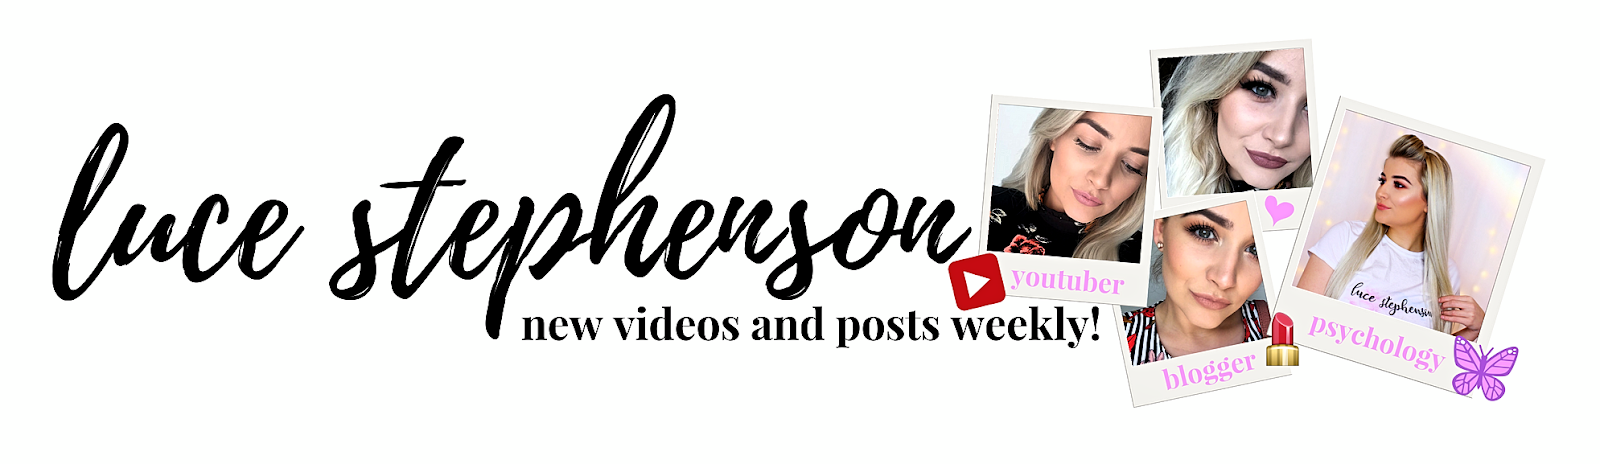 Luce Stephenson | UK Beauty Blog & YouTuber